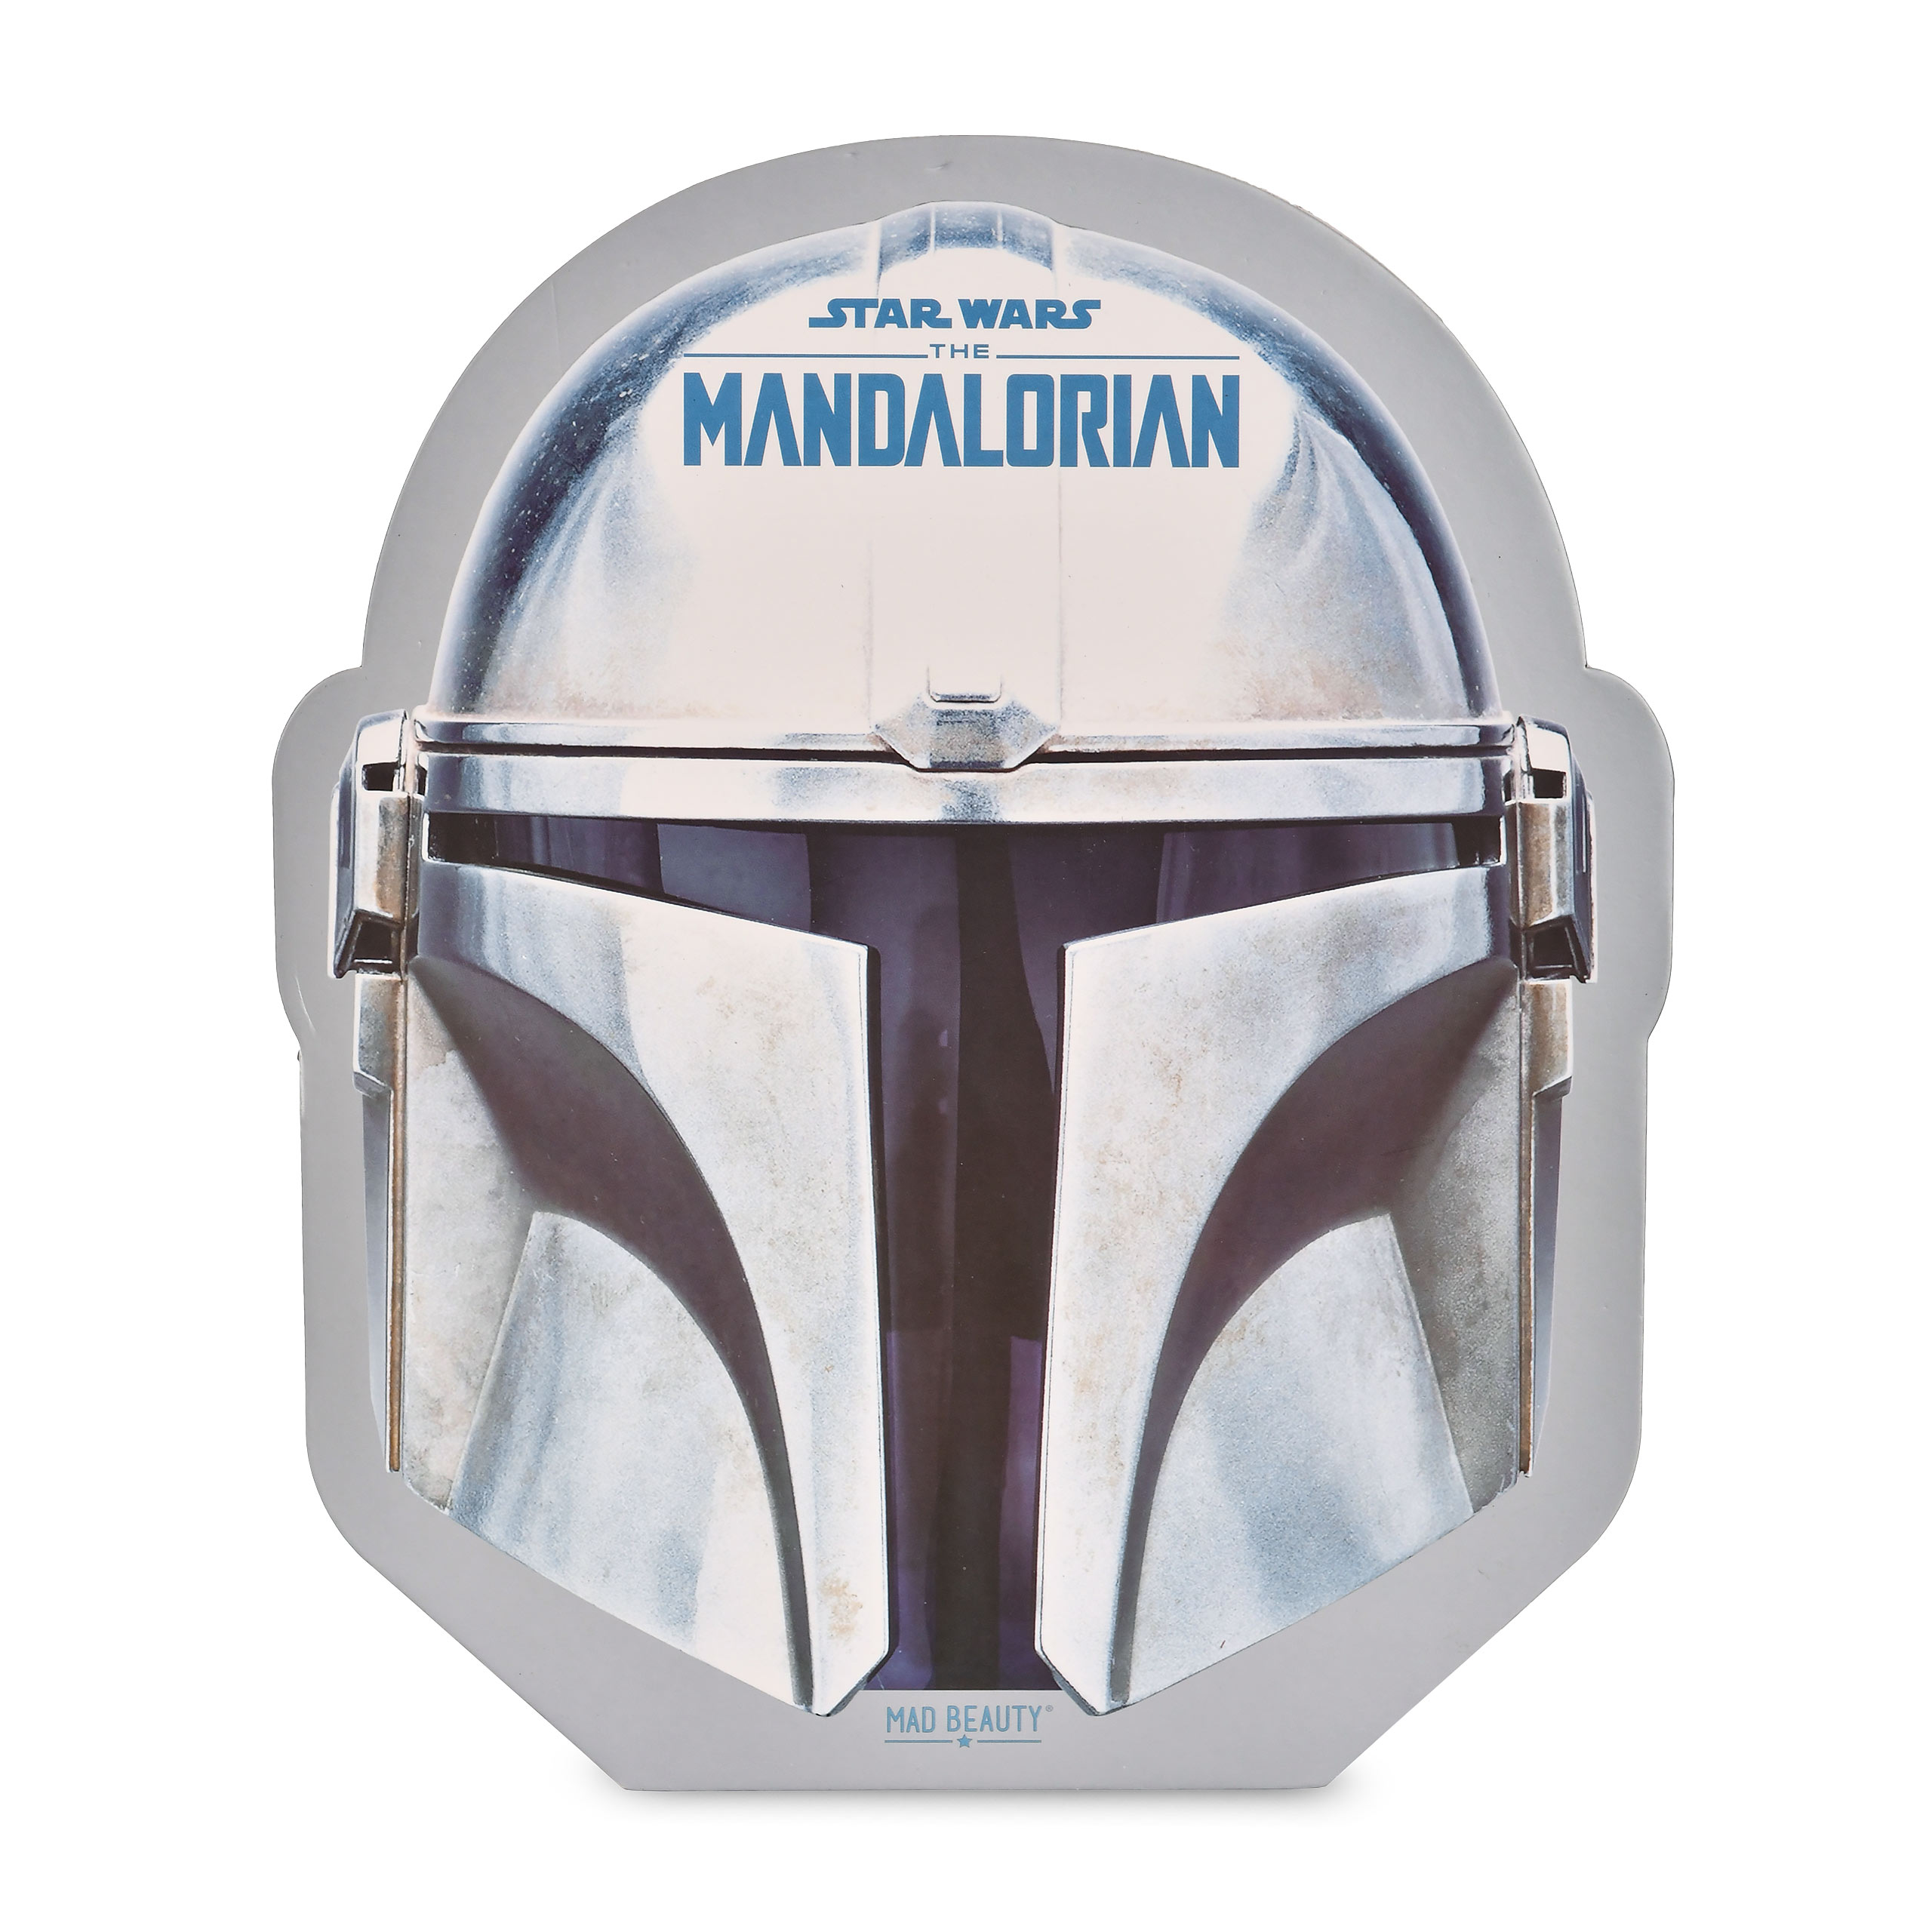 Star Wars The Mandalorian - Ensemble de bain